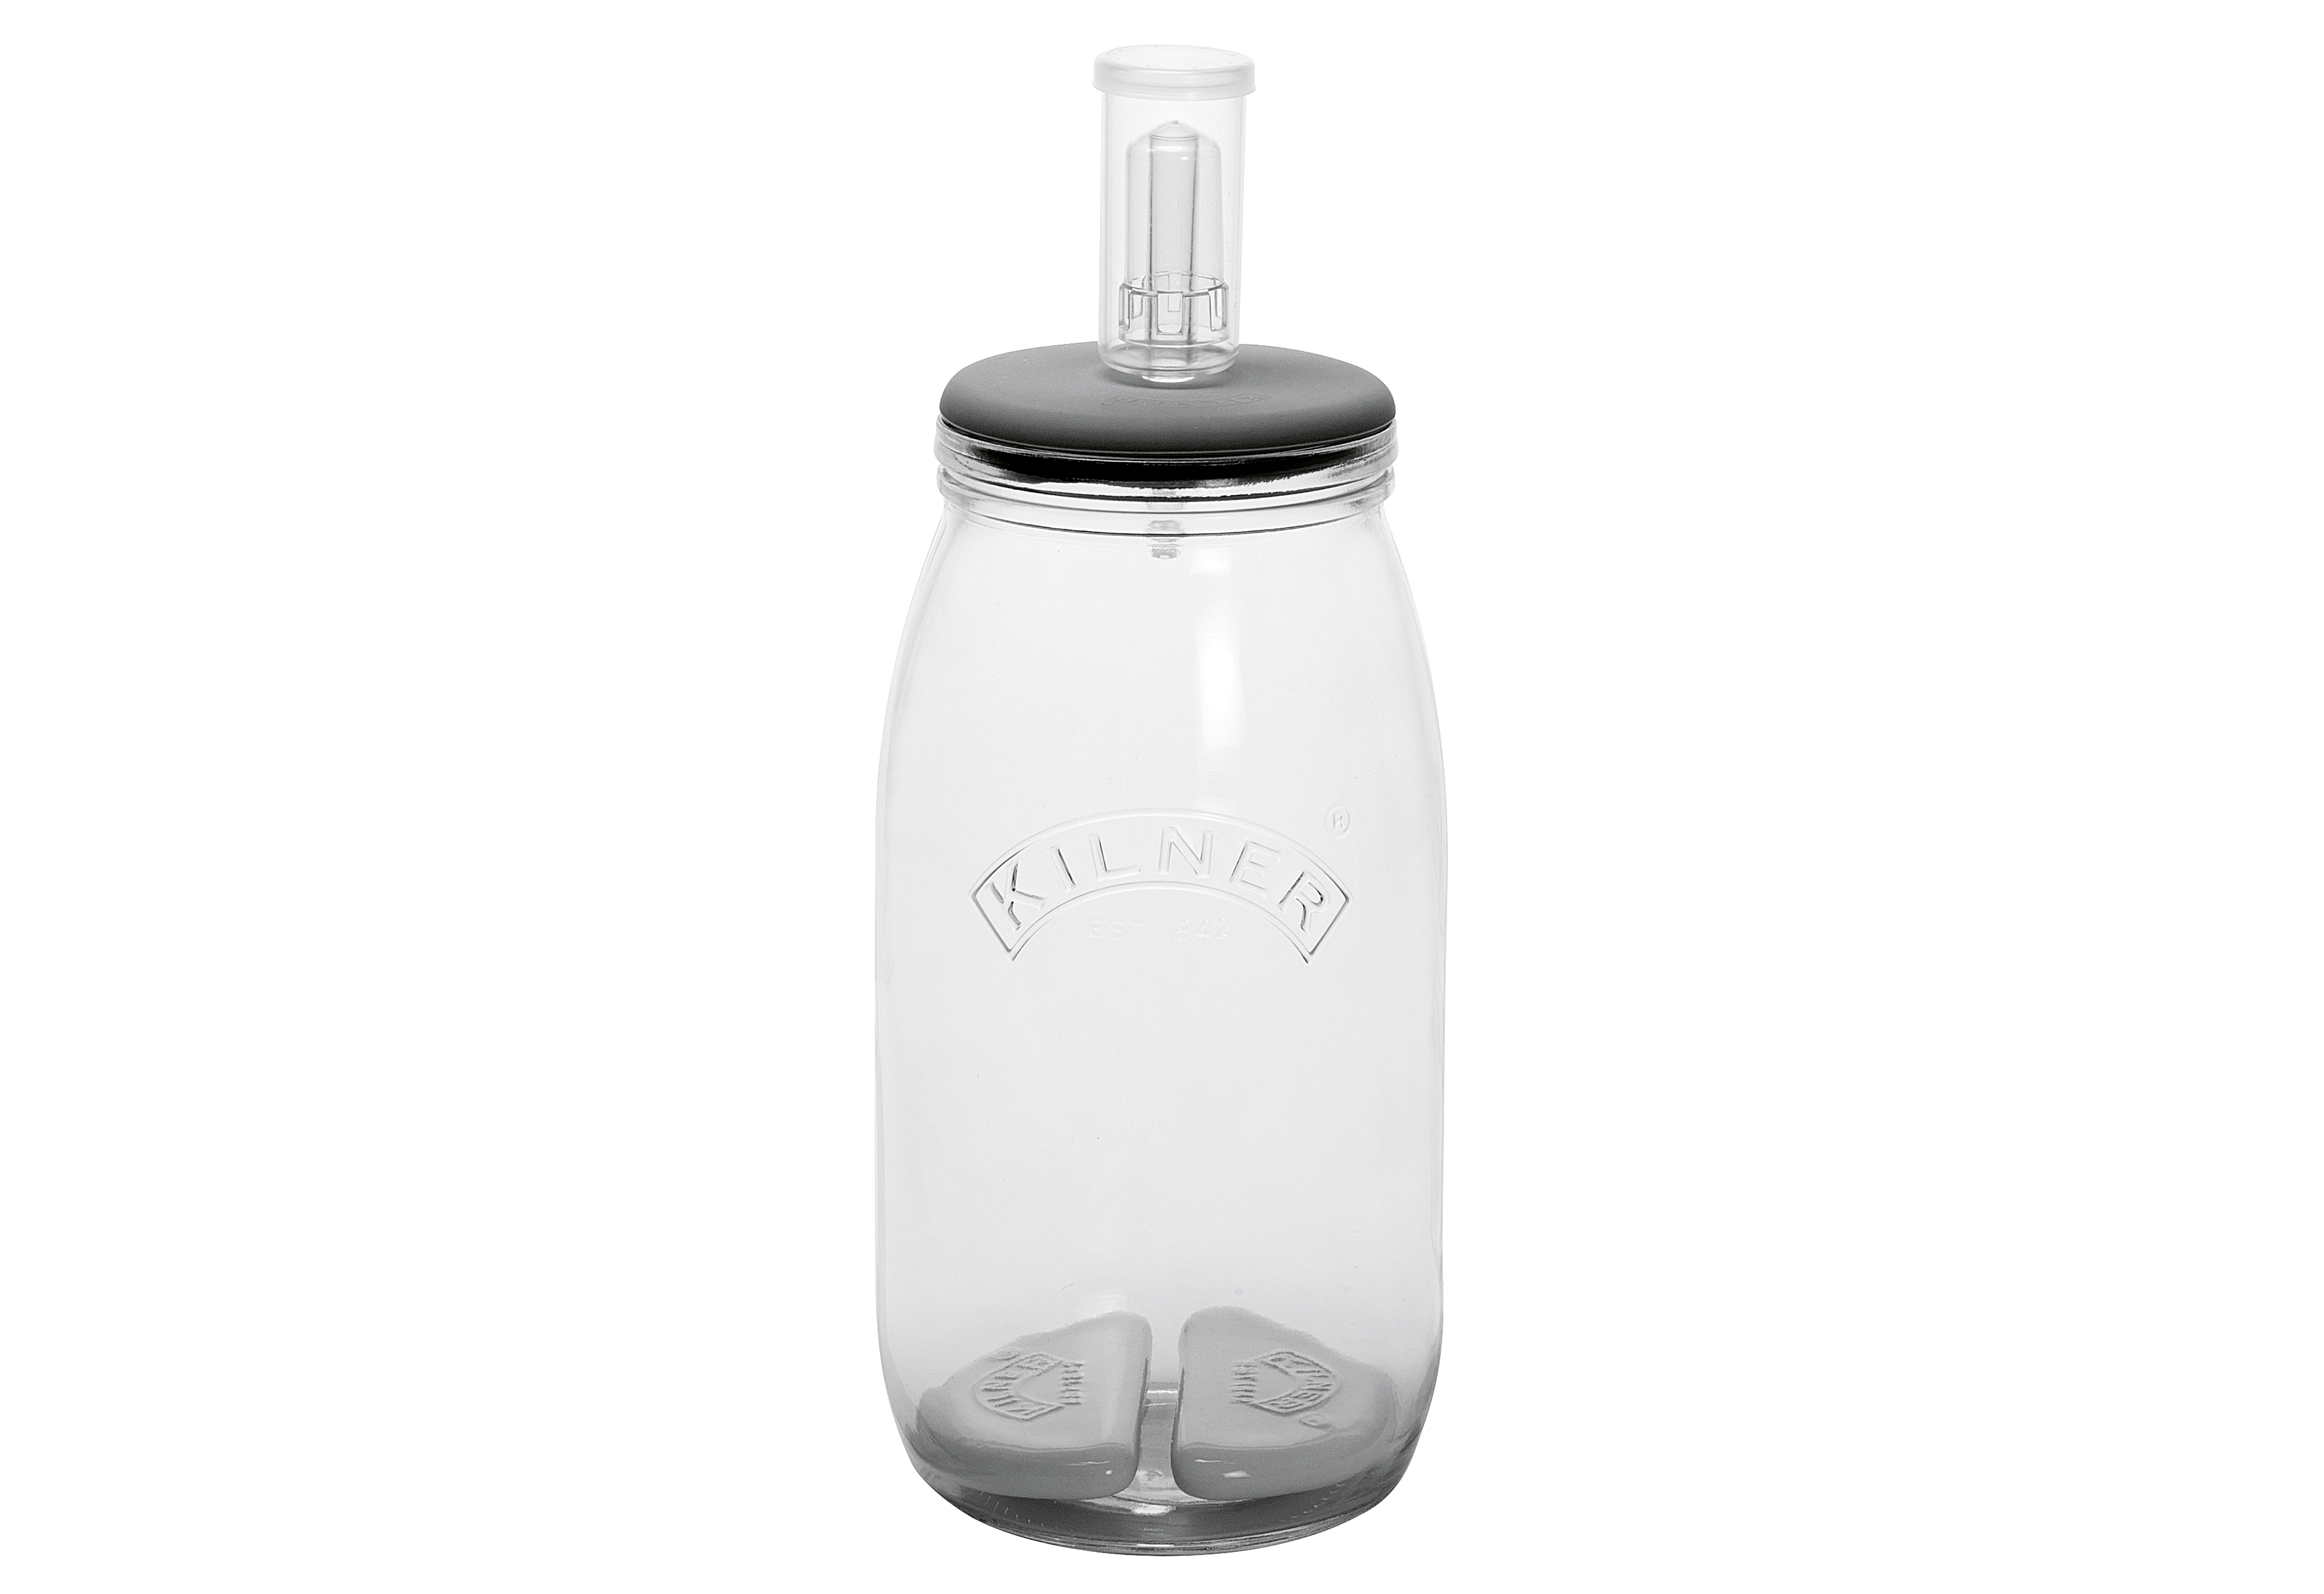 Fermentier-Set Glas / Silikon / Keramik 1 x 3 Liter-Schutzglas mit Silikon-Deckel,  1 x Luftentzugs-Pipette mit Stöpsel, 2 x Keramik-S